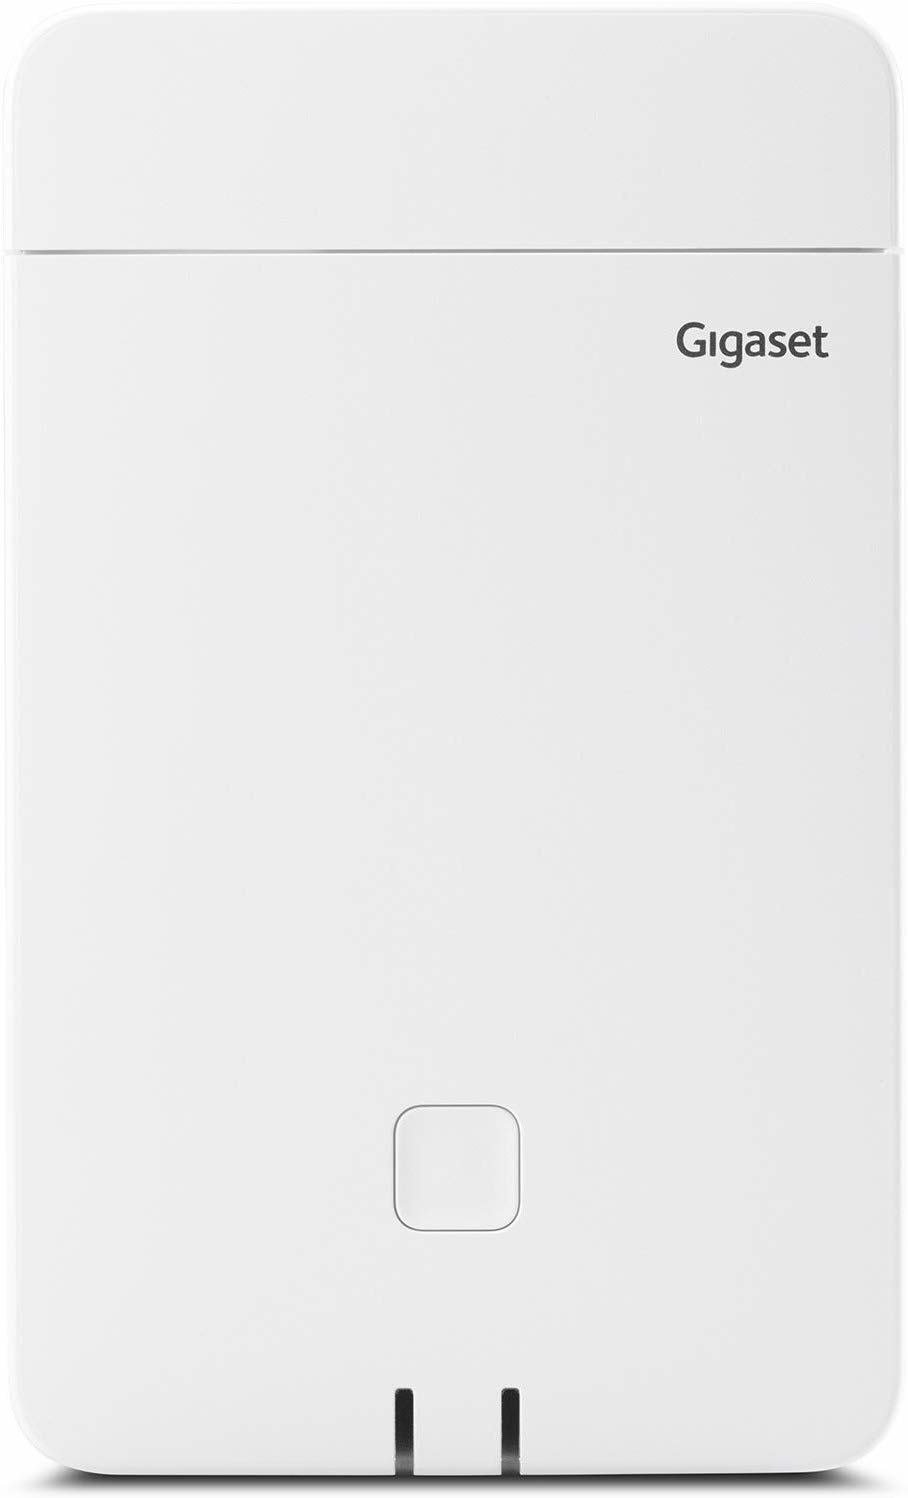 Gigaset N670 Ip Pro Dect Base Station White (Gigaset N670 Pro Cell)